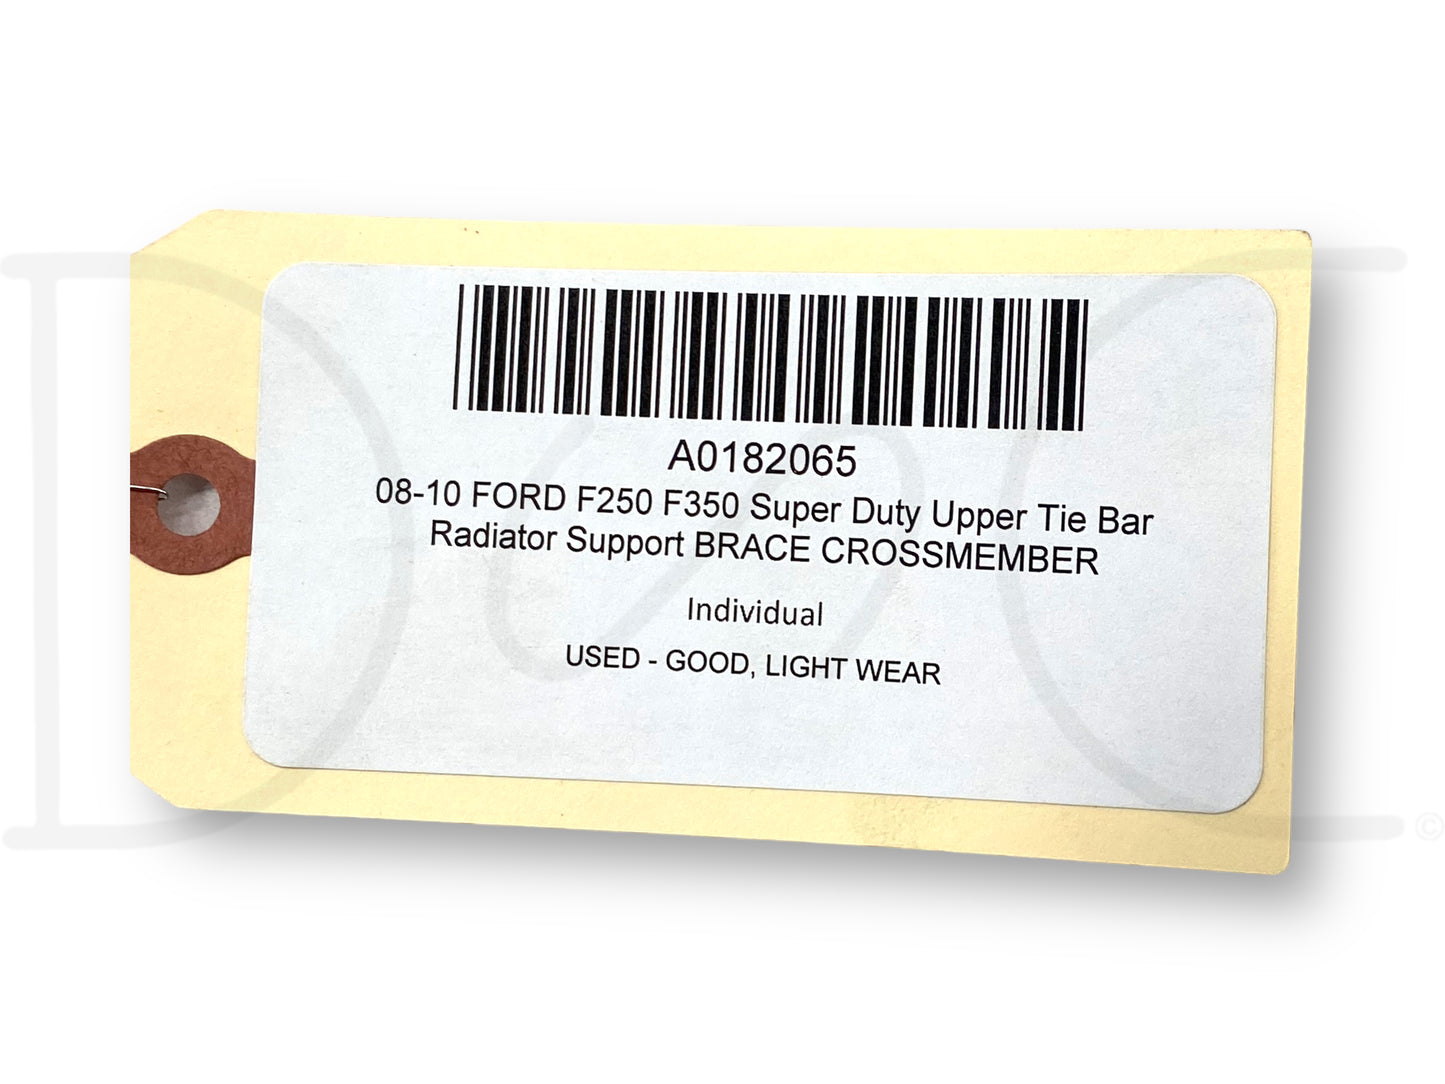 08-10 Ford F250 F350 Super Duty Upper Tie Bar Radiator Support Brace Crossmember